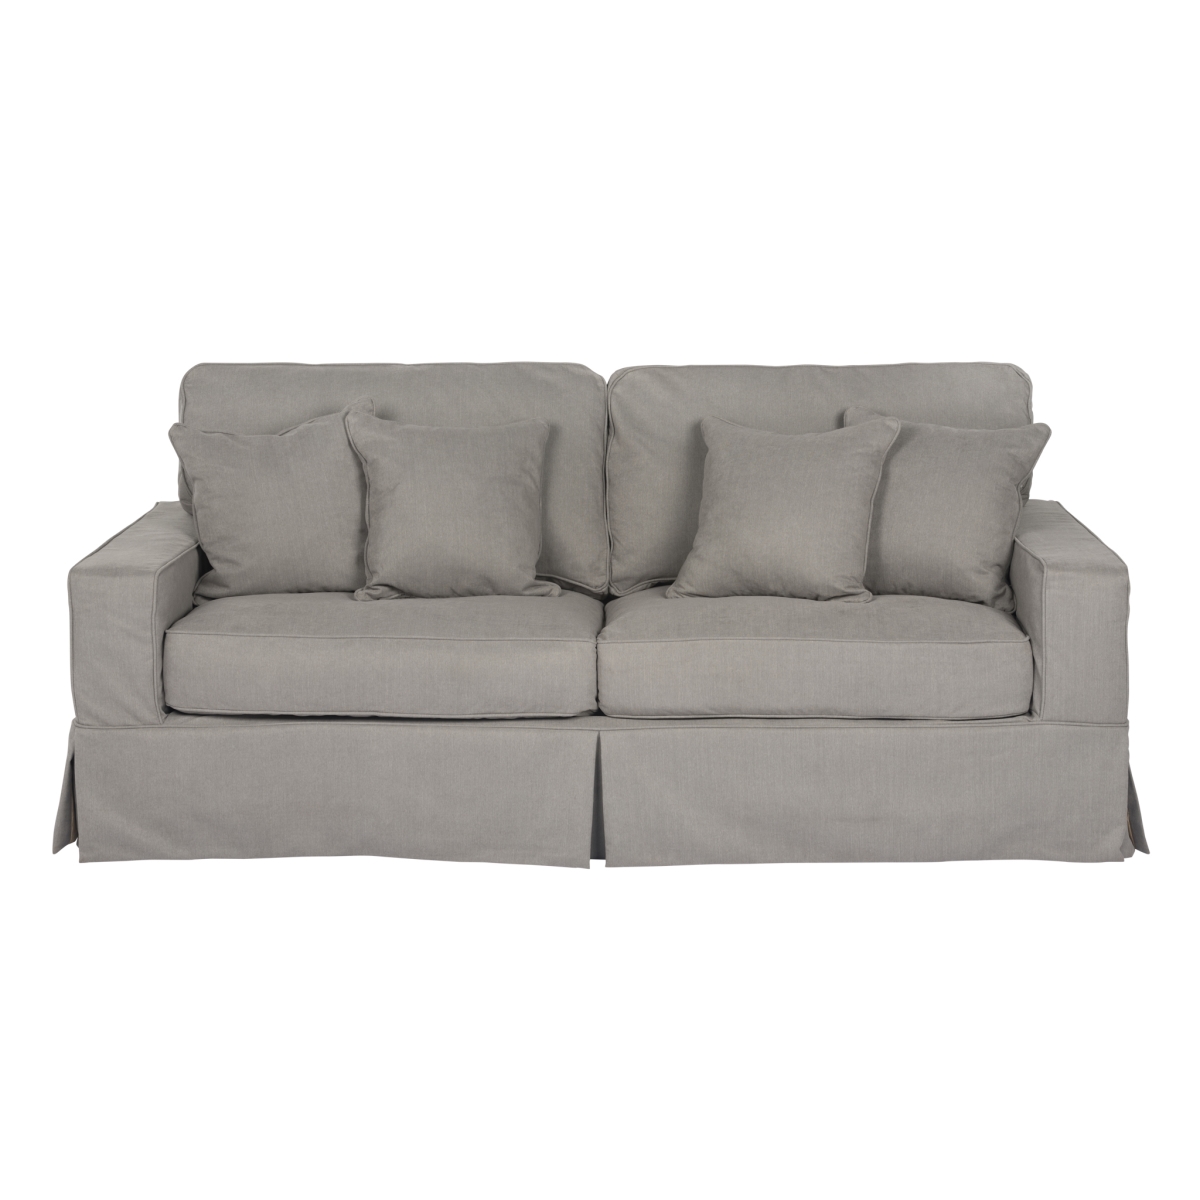 Su-108500sc-391094 Americana Sofa Slipcover Set, Peyton Slate